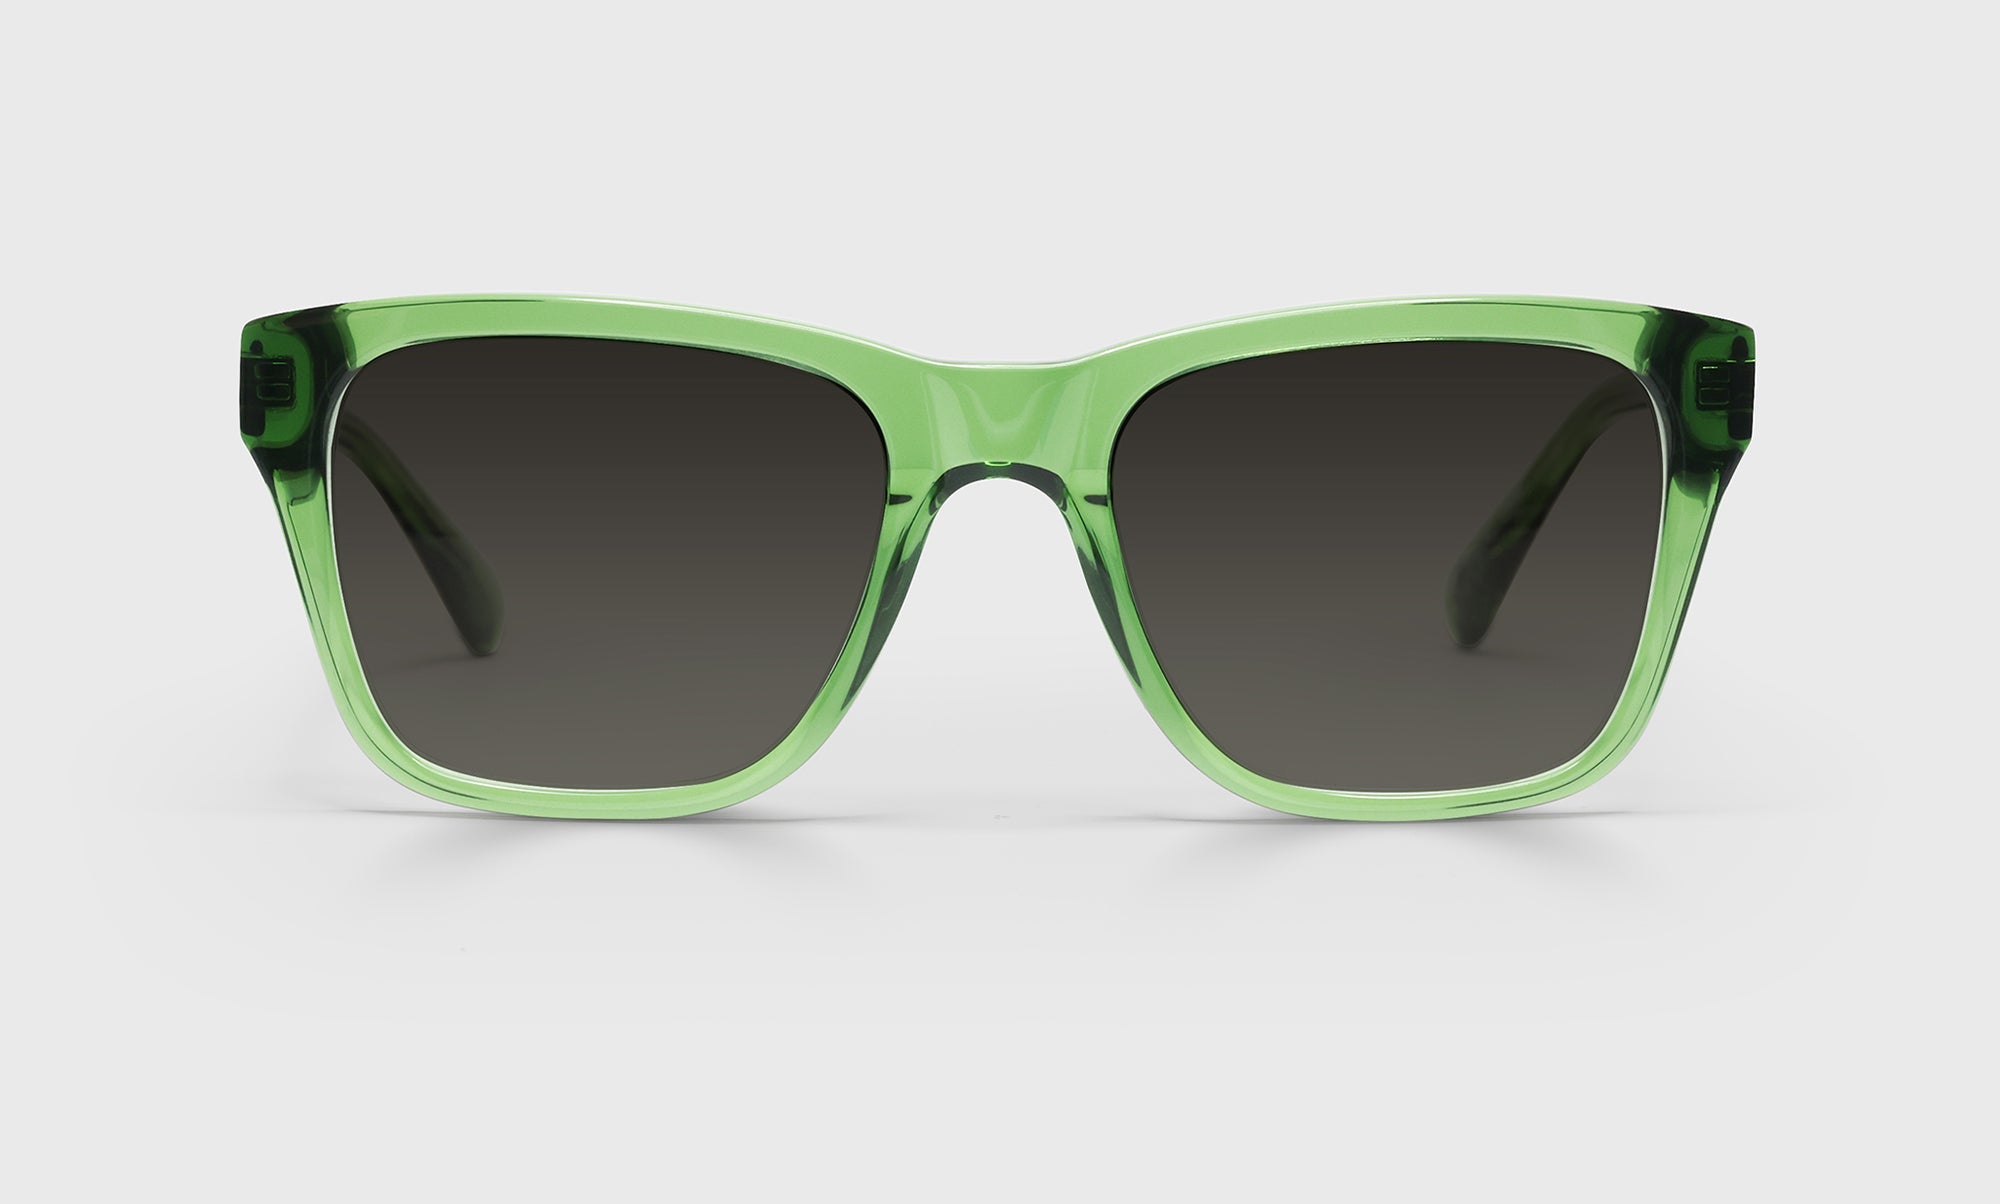 11-pg | eyebobs premium designer kvetcher readers, blue light and prescription glasses in green, polarized grey